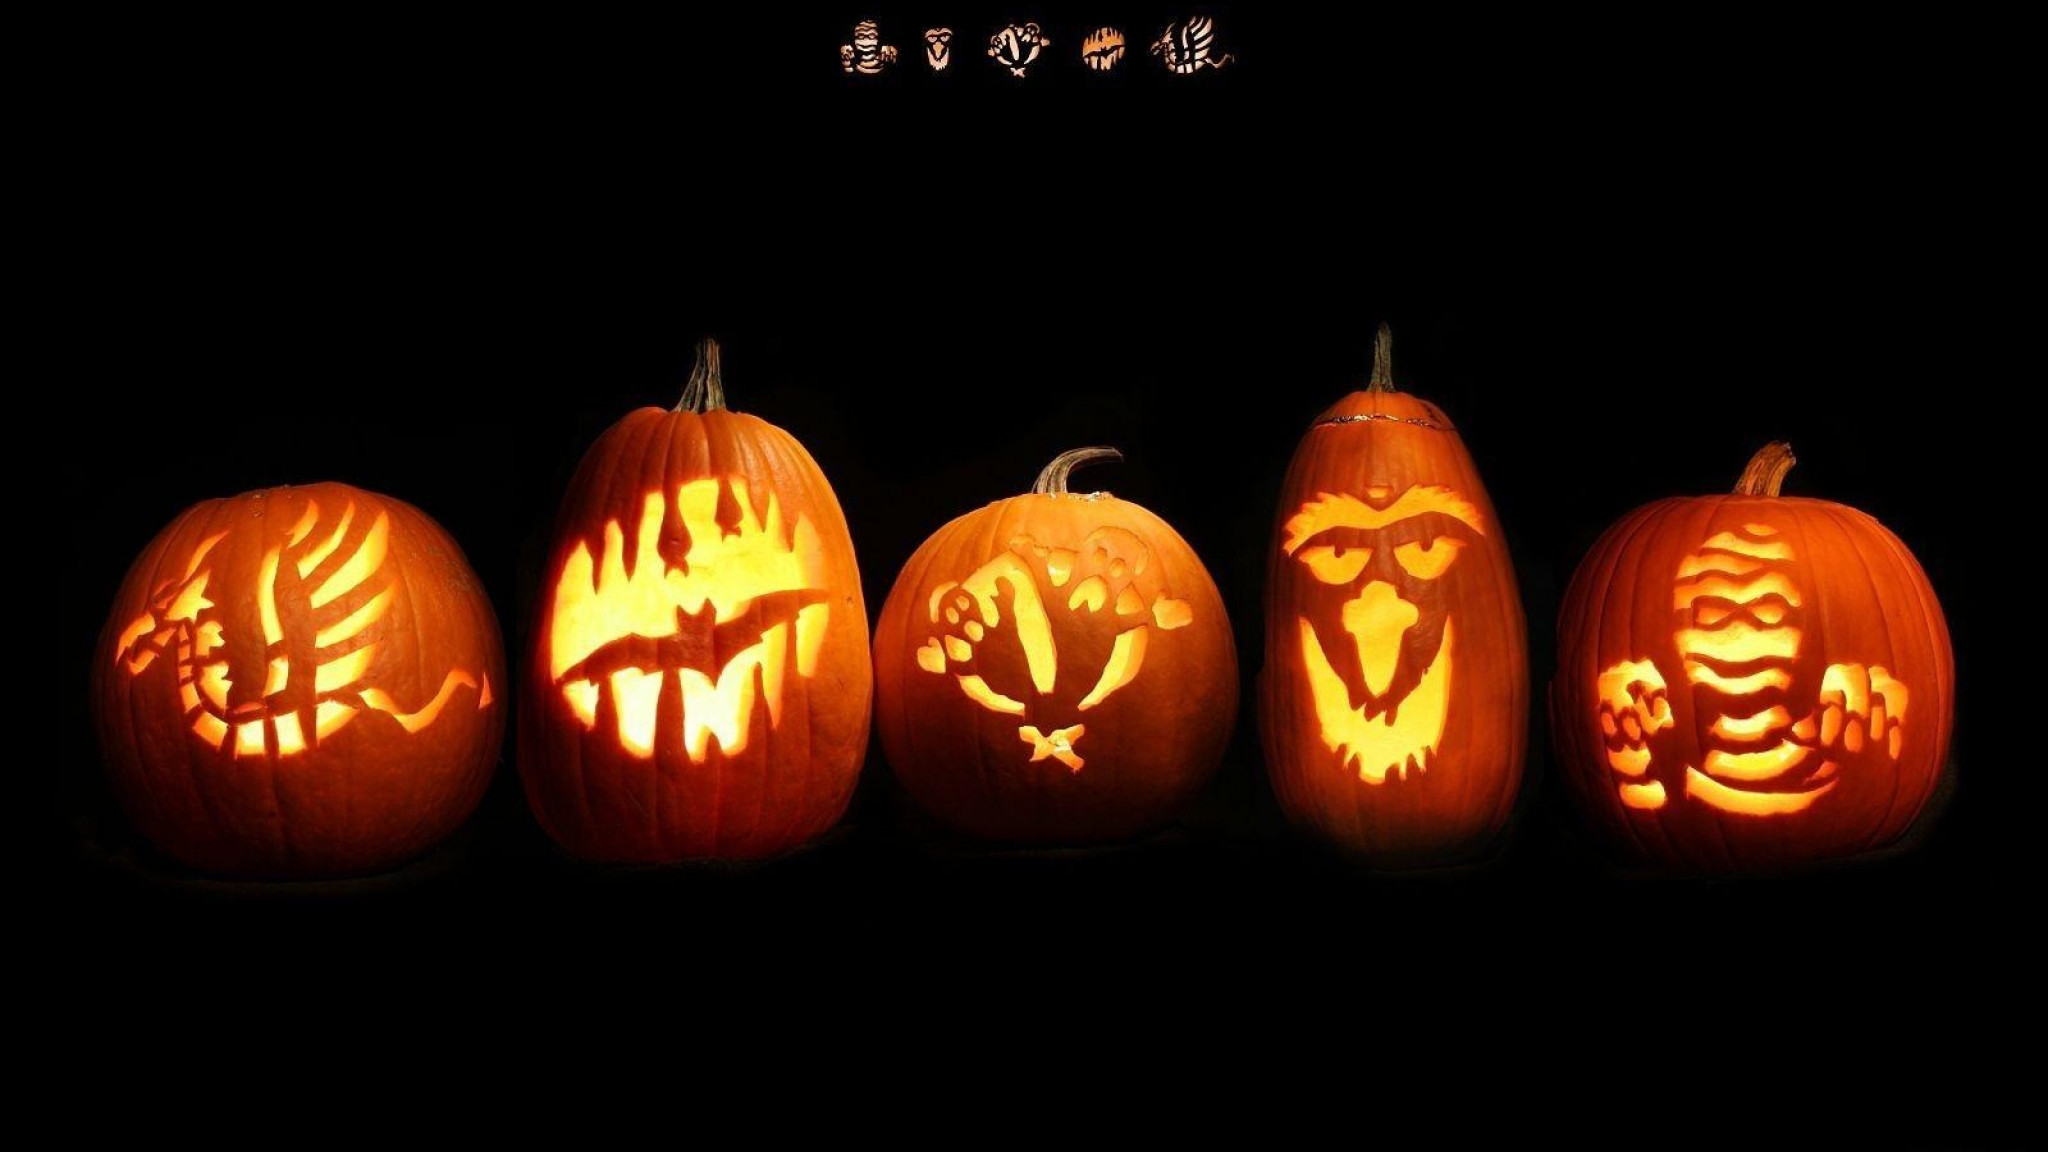 2048x1152 Full Size of Uncategorized: Halloween Holiday Pumpkin Faces Lights Signs  Black Background 37698  Uncategorized ...